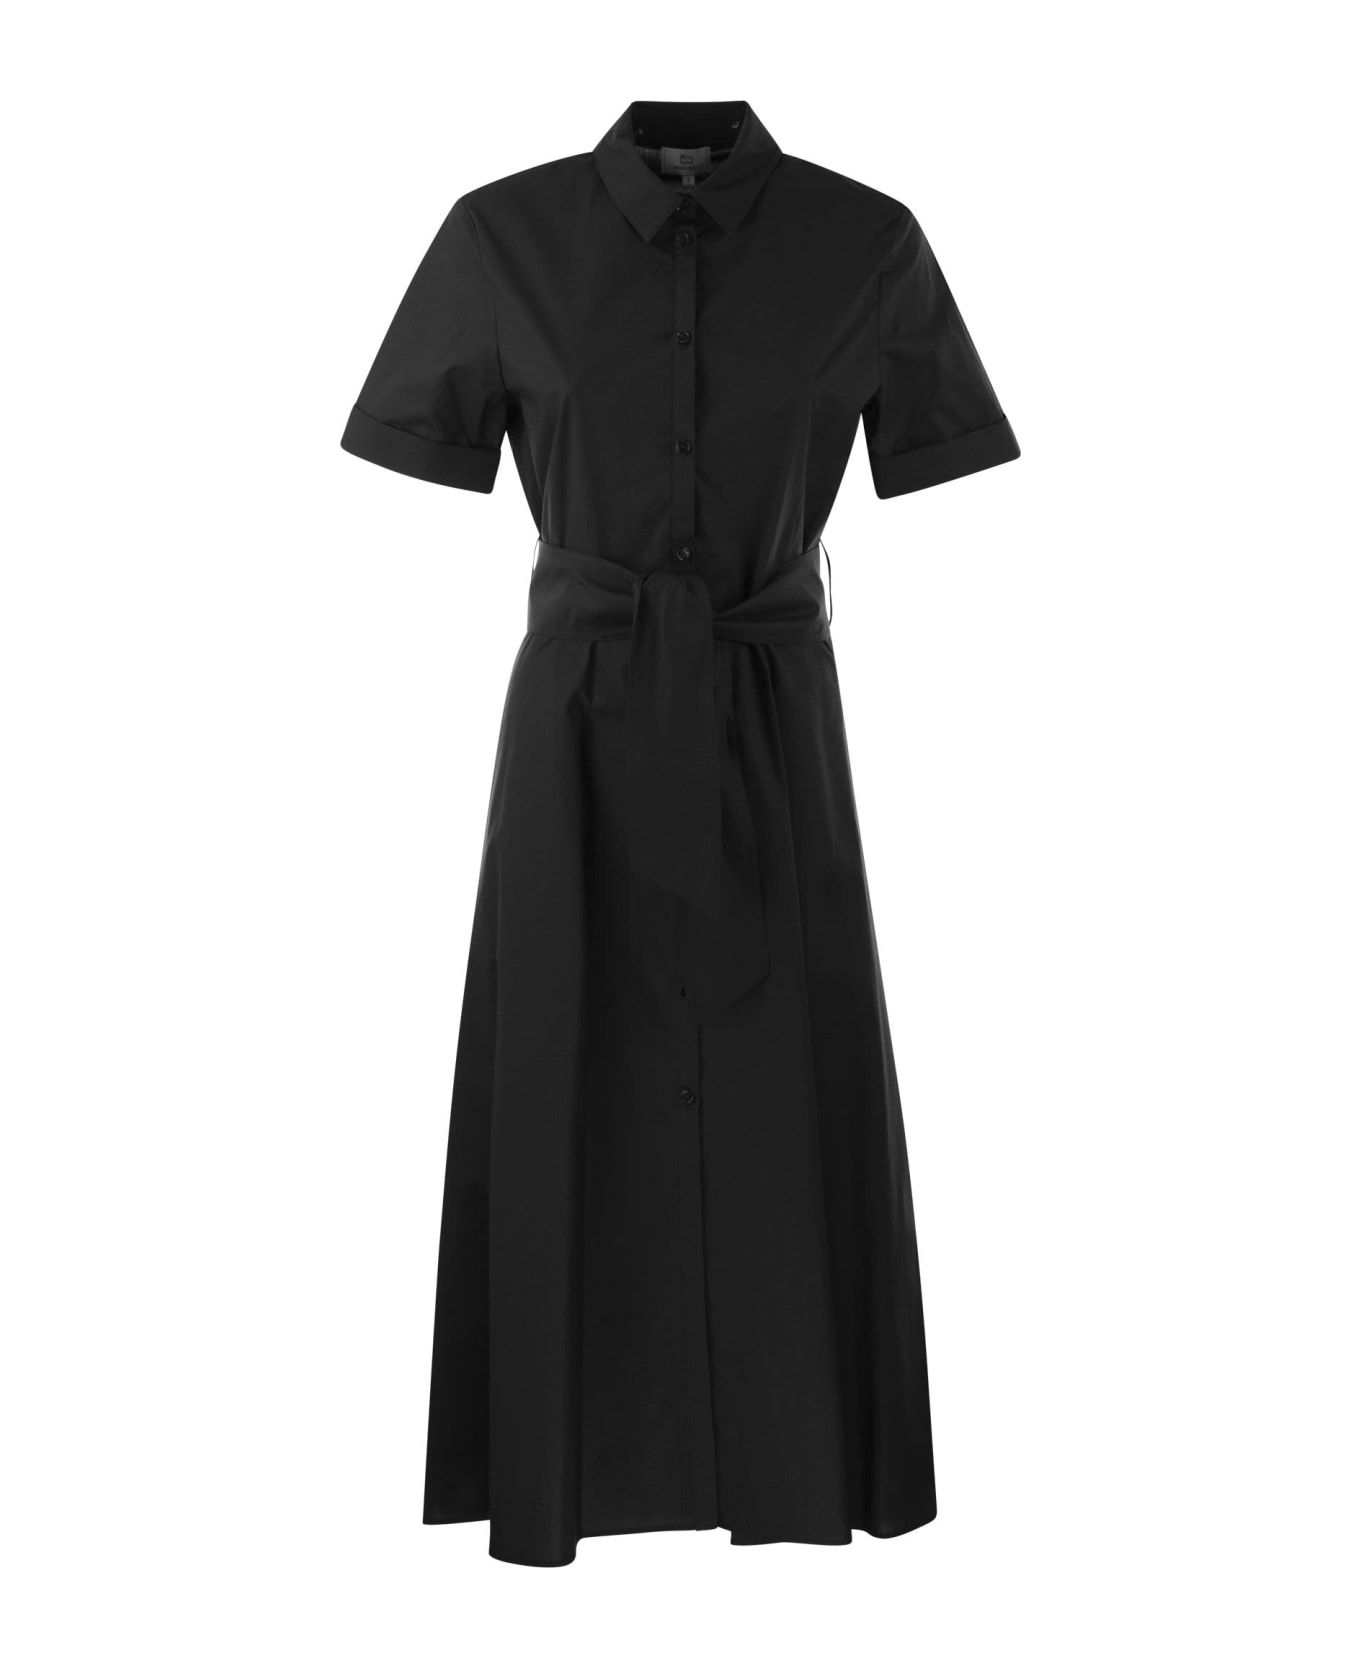 Woolrich Black Cotton Shirt Dress - Black